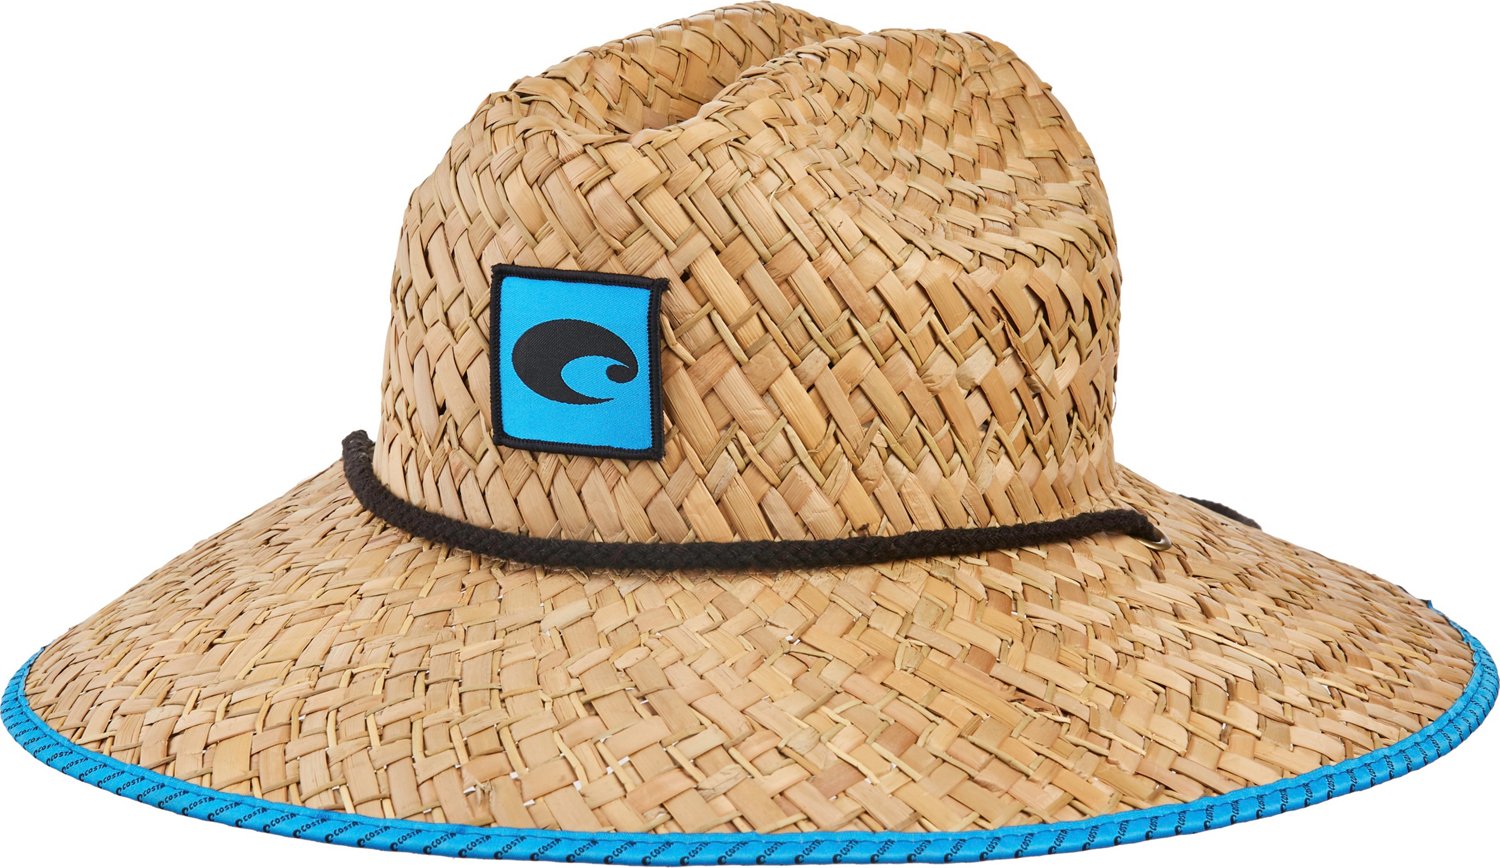 Academy Sports + Outdoors Costa Del Mar Adults' Lifeguard Hat